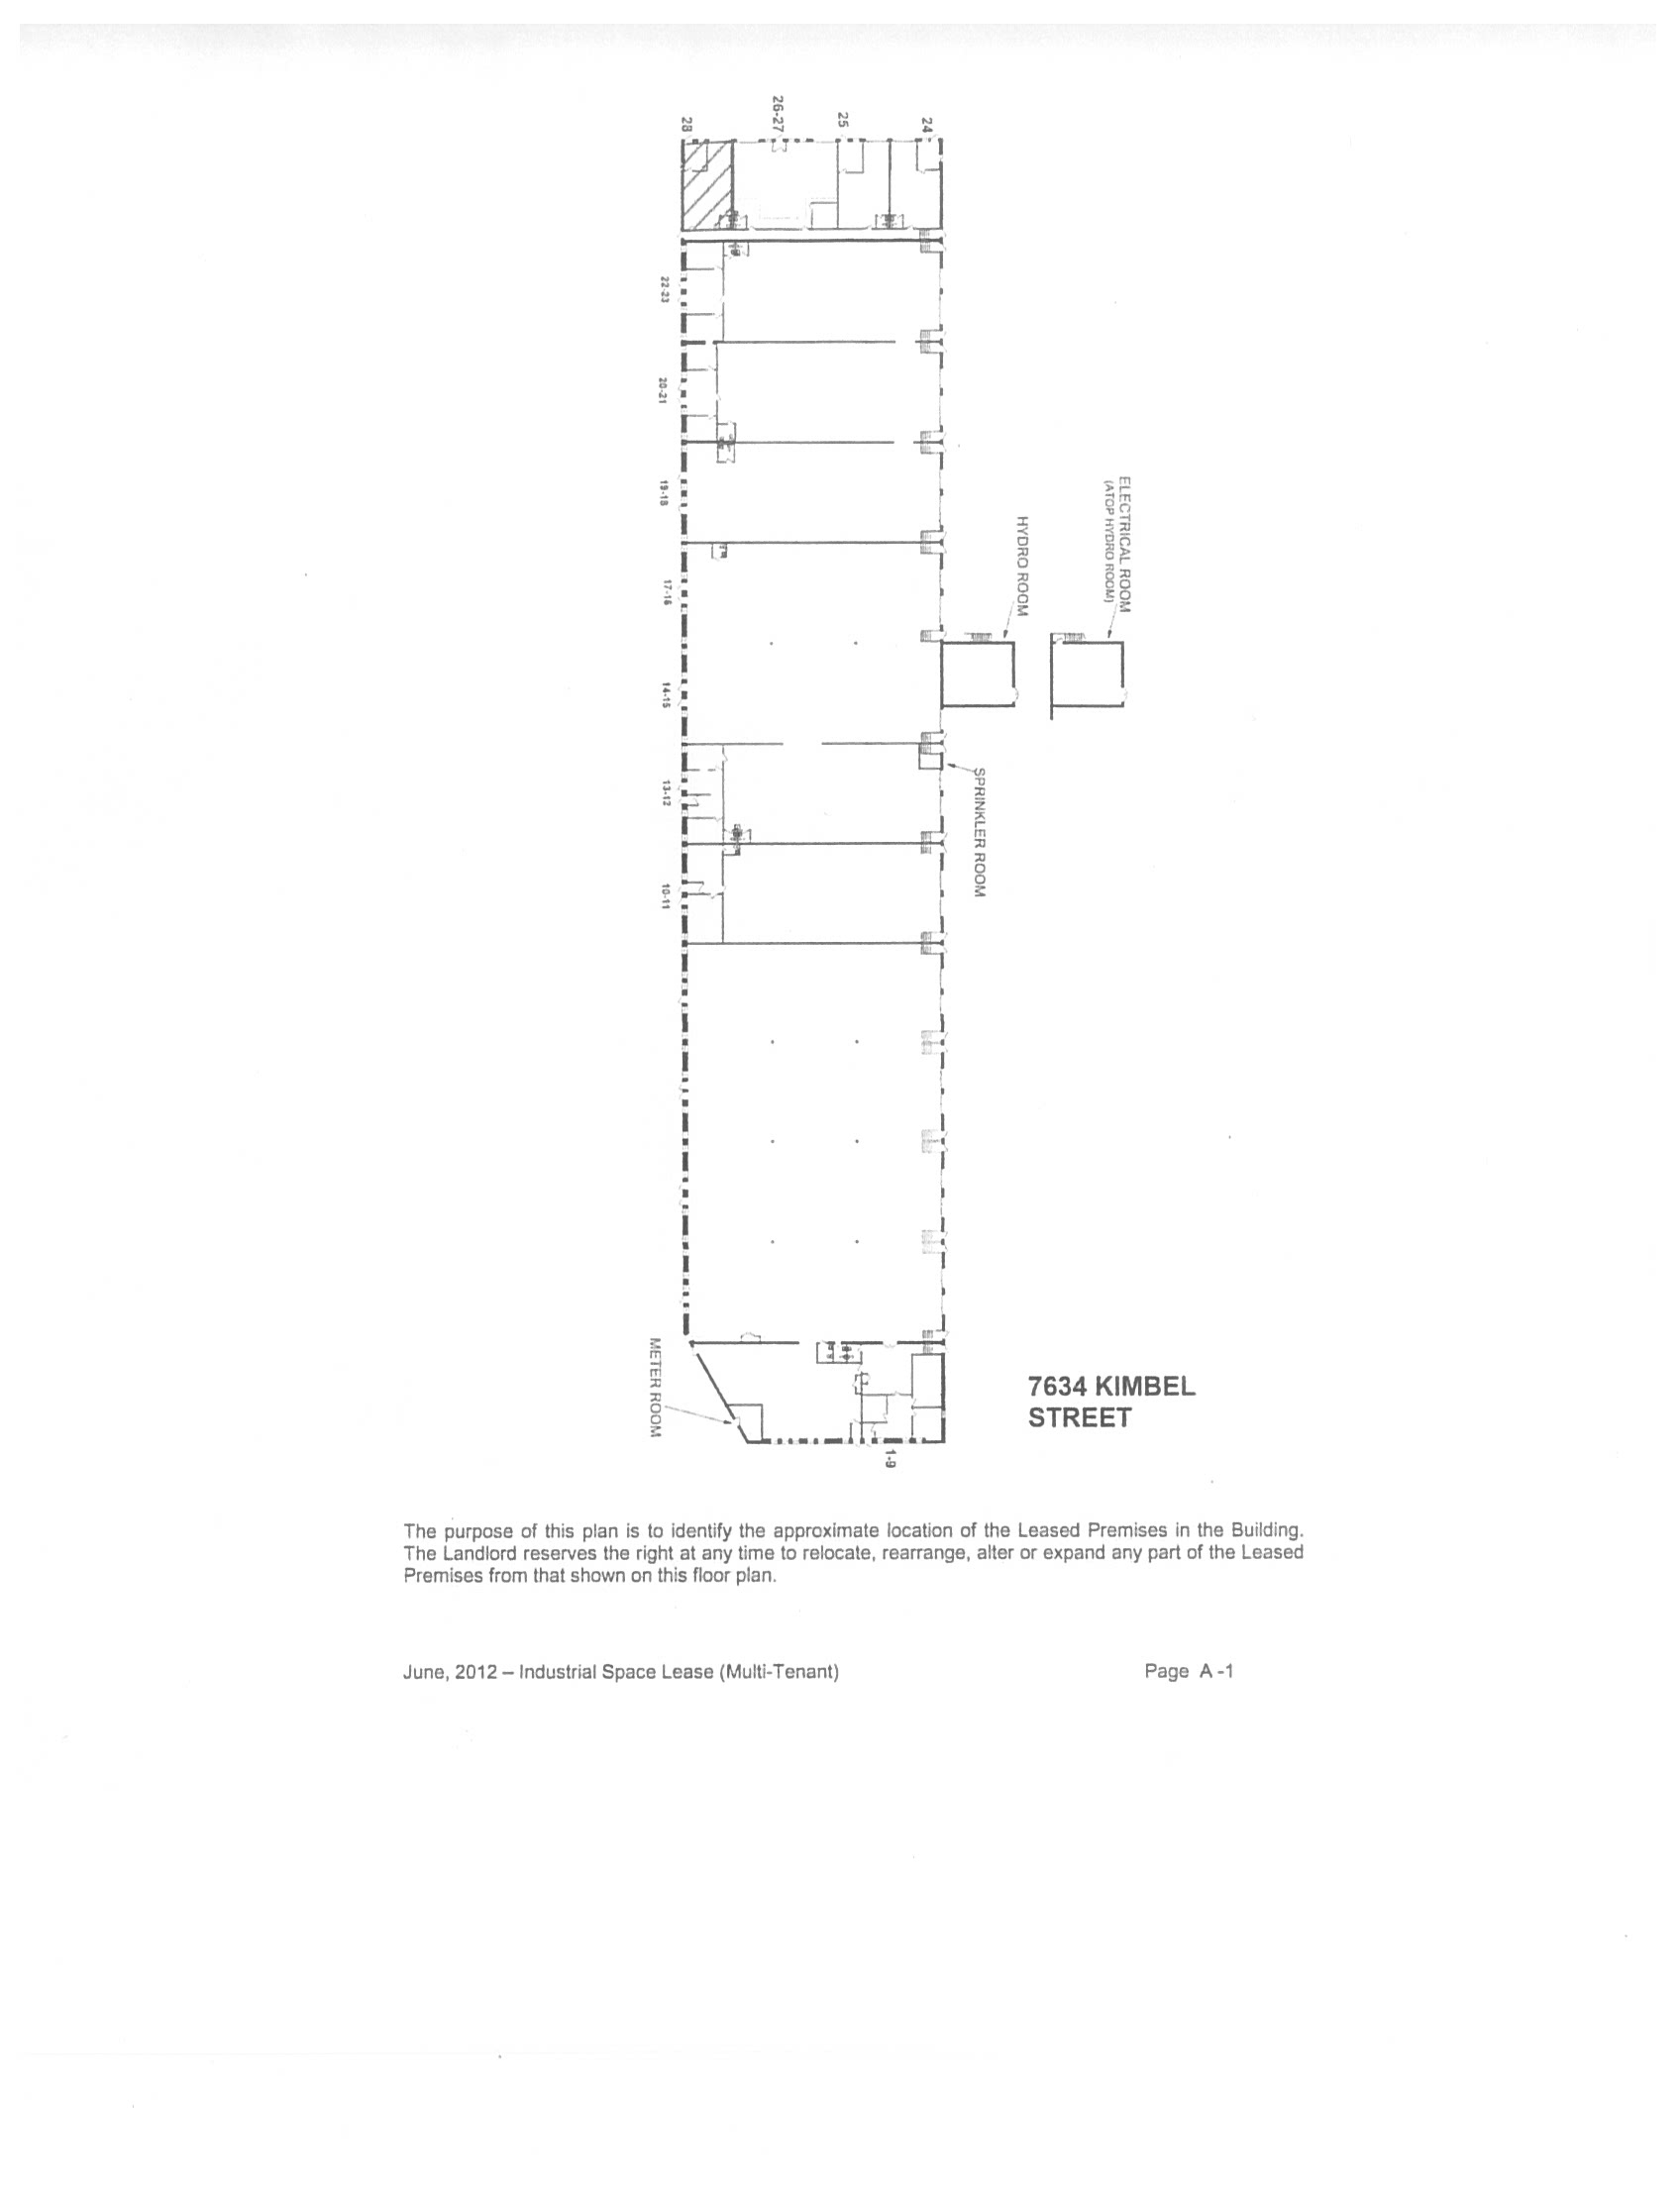 7634 kimbel street site plan